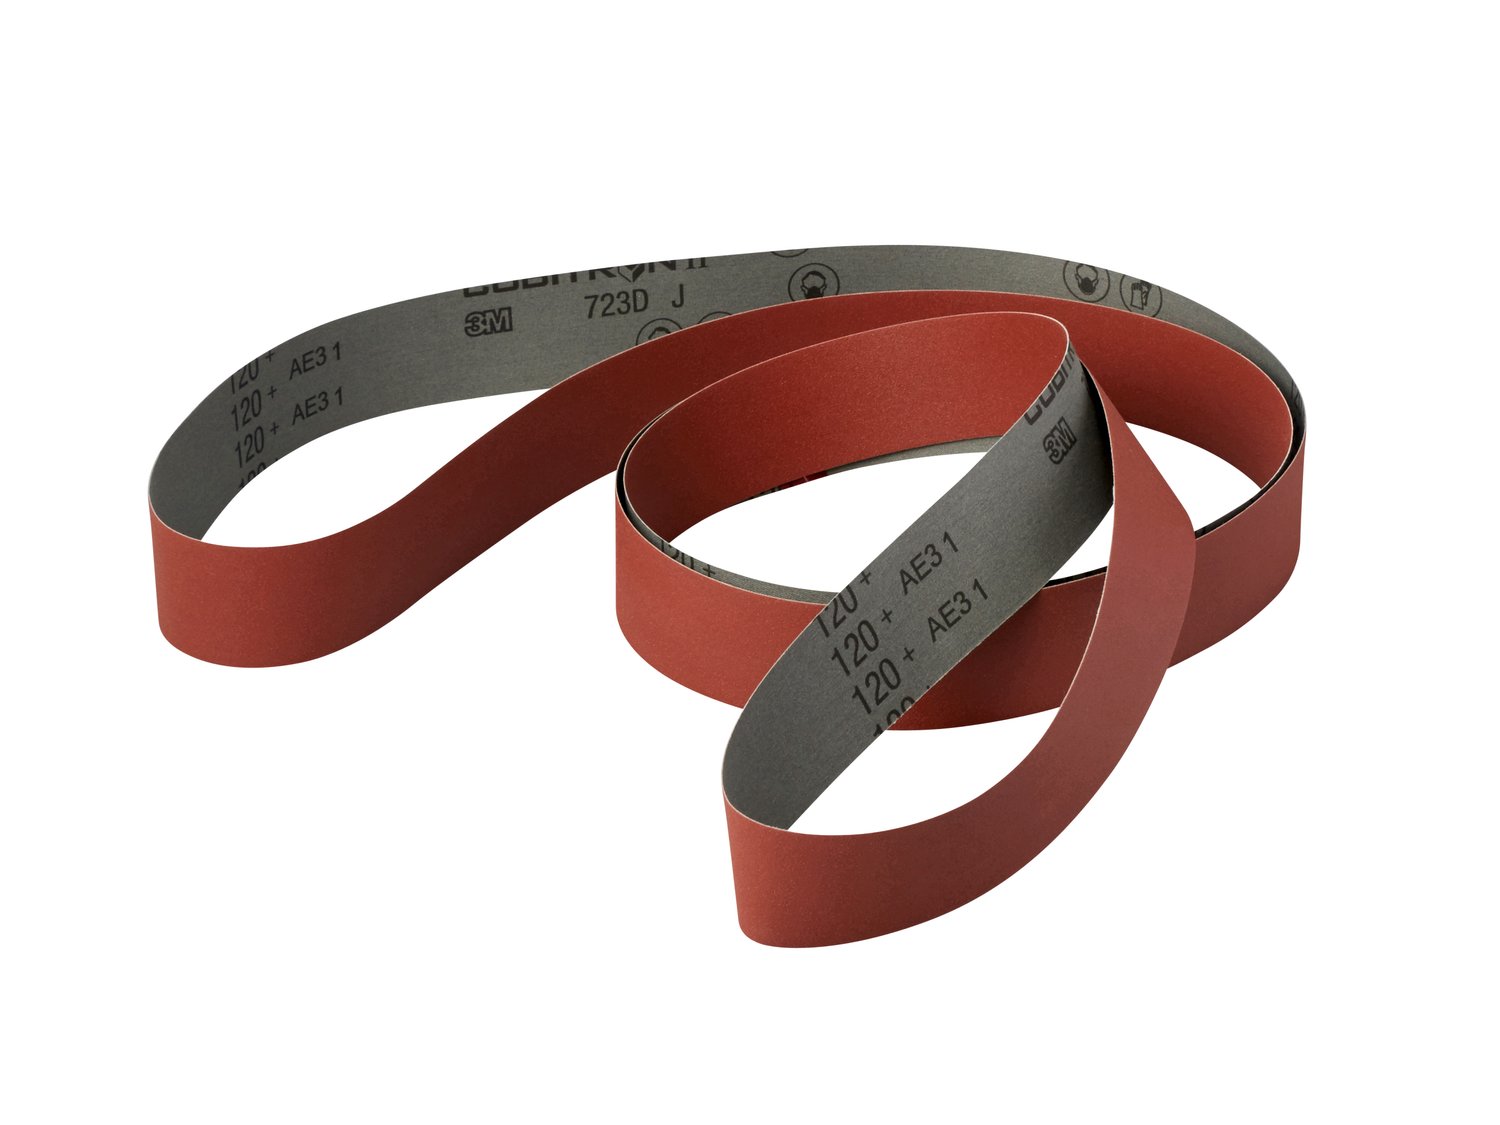 7010515540 - 3M Cubitron ll Cloth Belt 723D, 220+ J-weight, 6 in x 118-5/8 in,
Film-lok, Full-flex